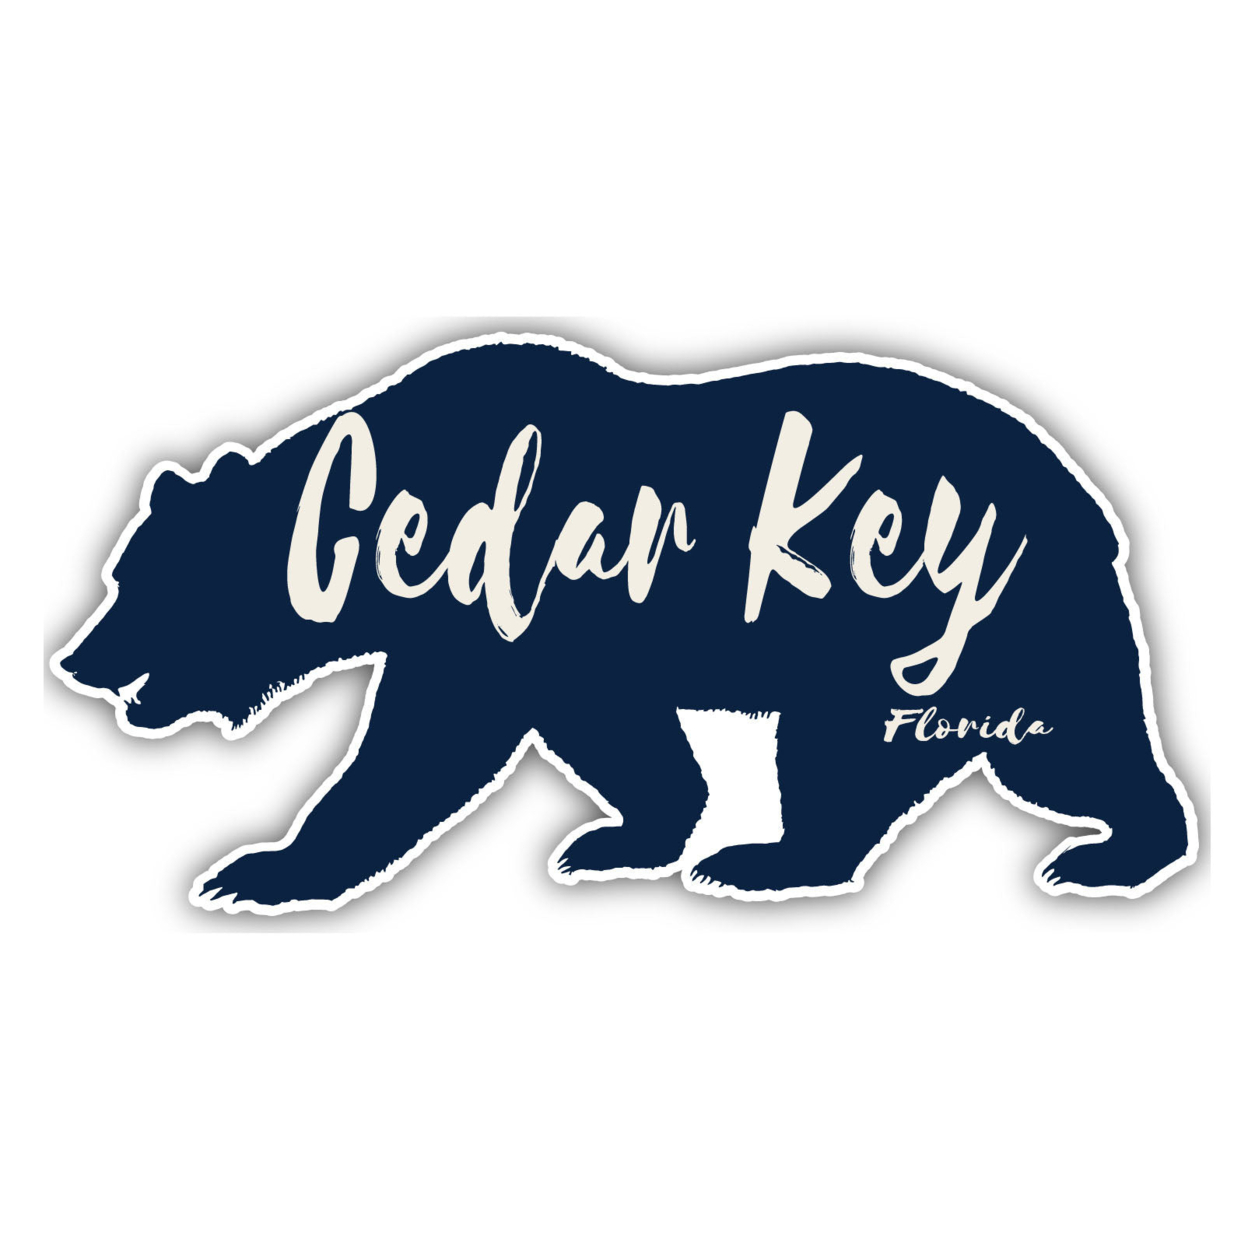 Cedar Key Florida Souvenir Decorative Stickers (Choose Theme And Size) - 4-Pack, 8-Inch, Tent